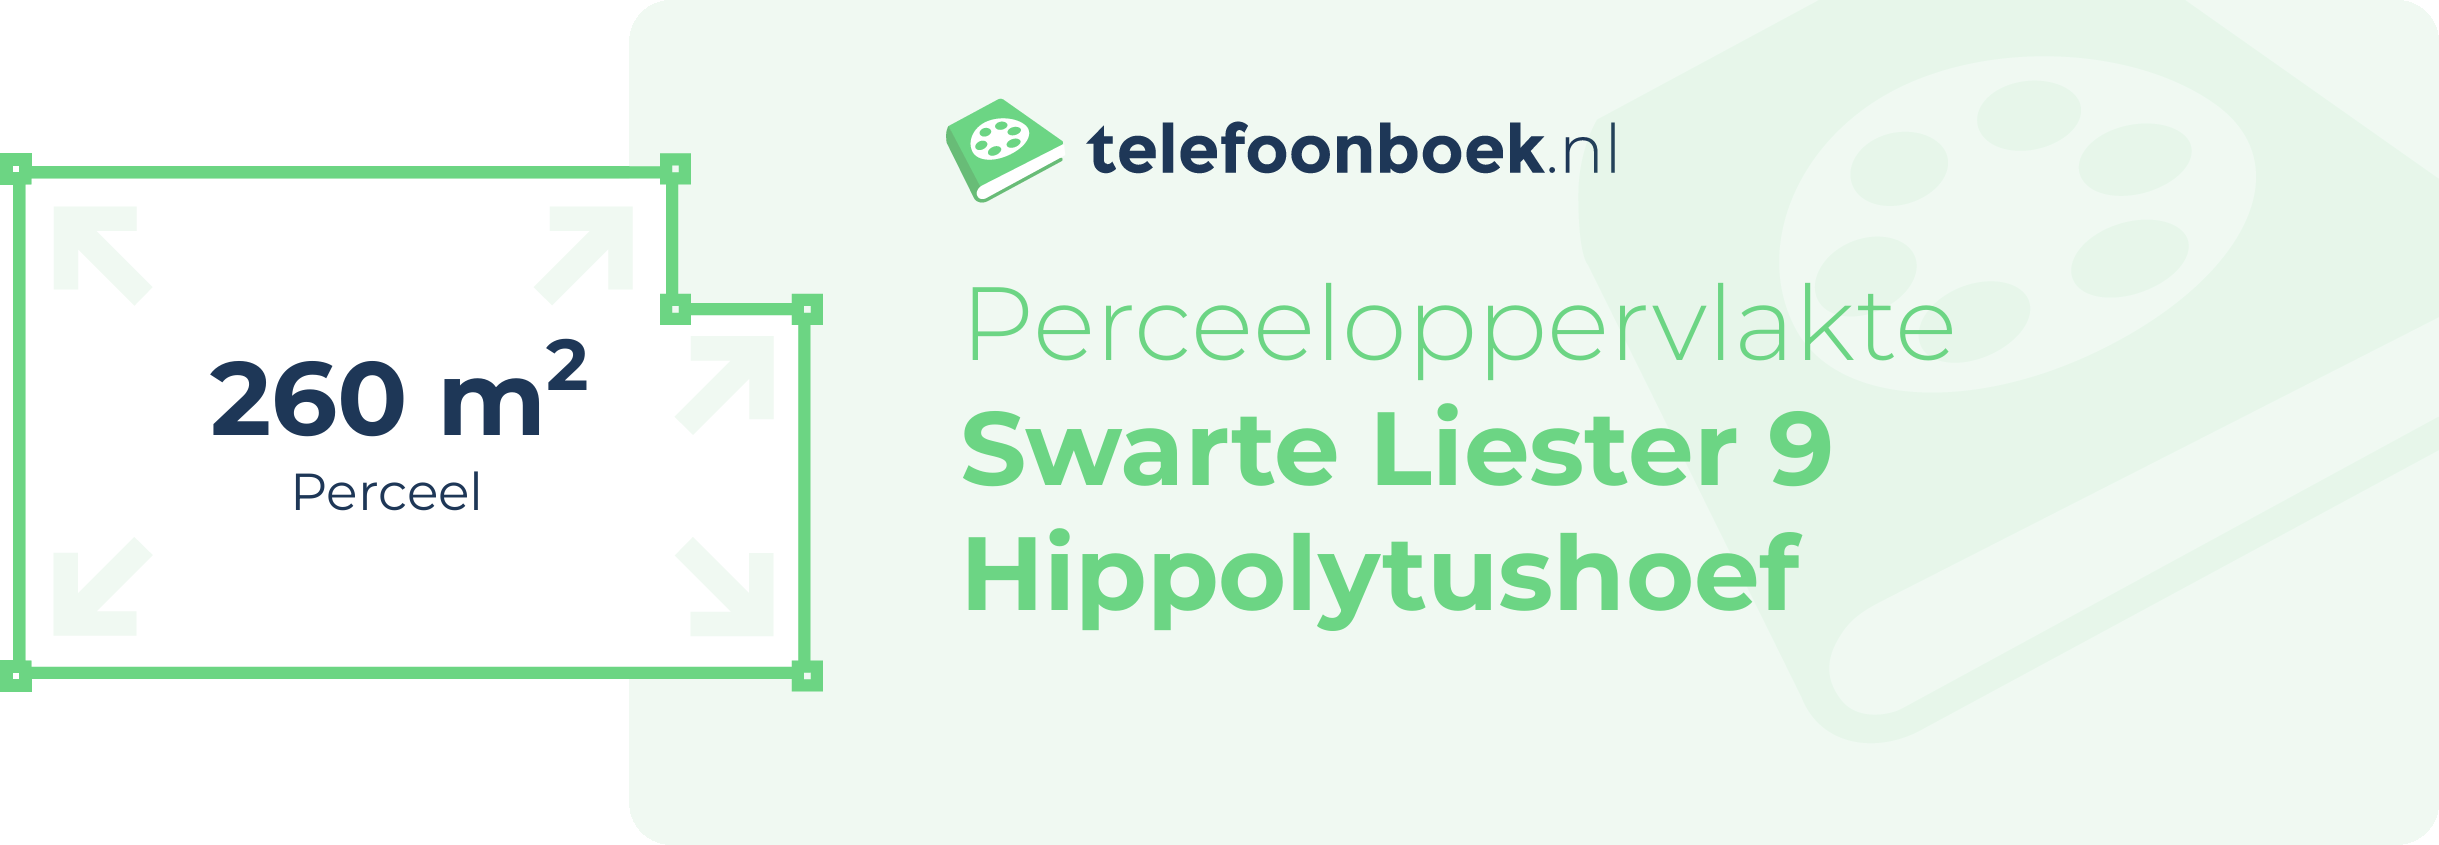 Perceeloppervlakte Swarte Liester 9 Hippolytushoef